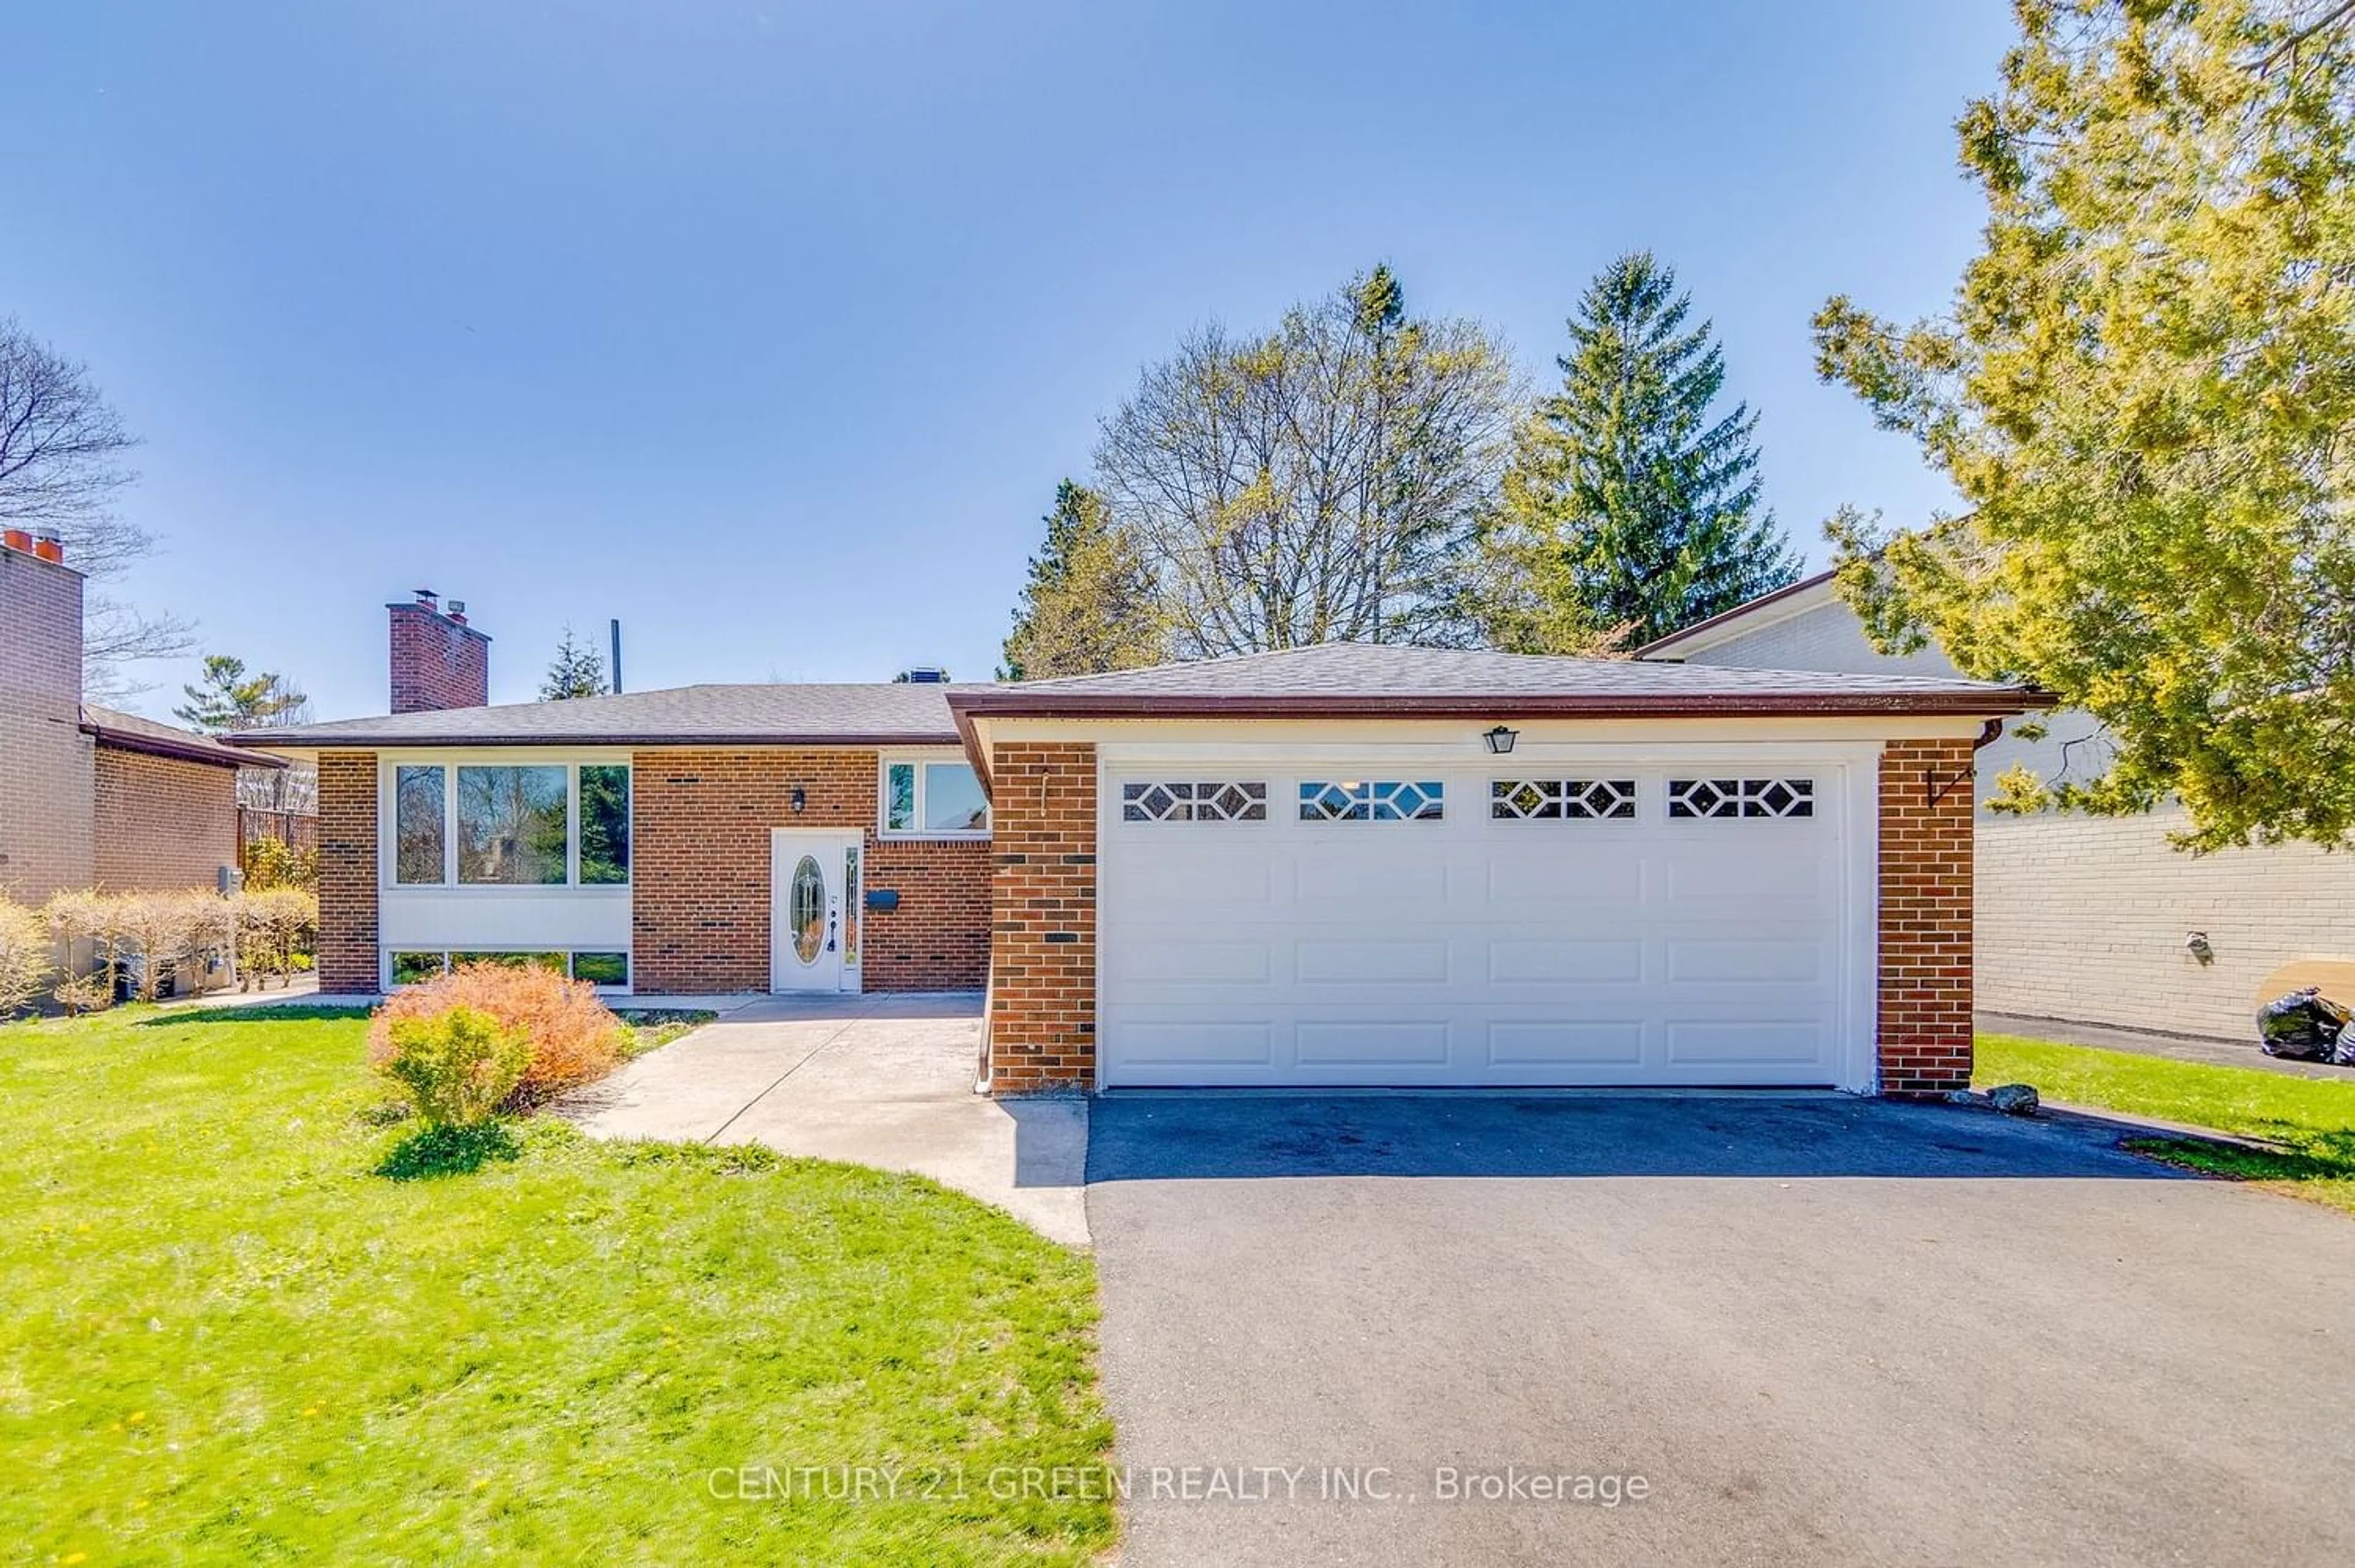 Home with brick exterior material for 55 Regency Sq, Toronto Ontario M1E 1N4